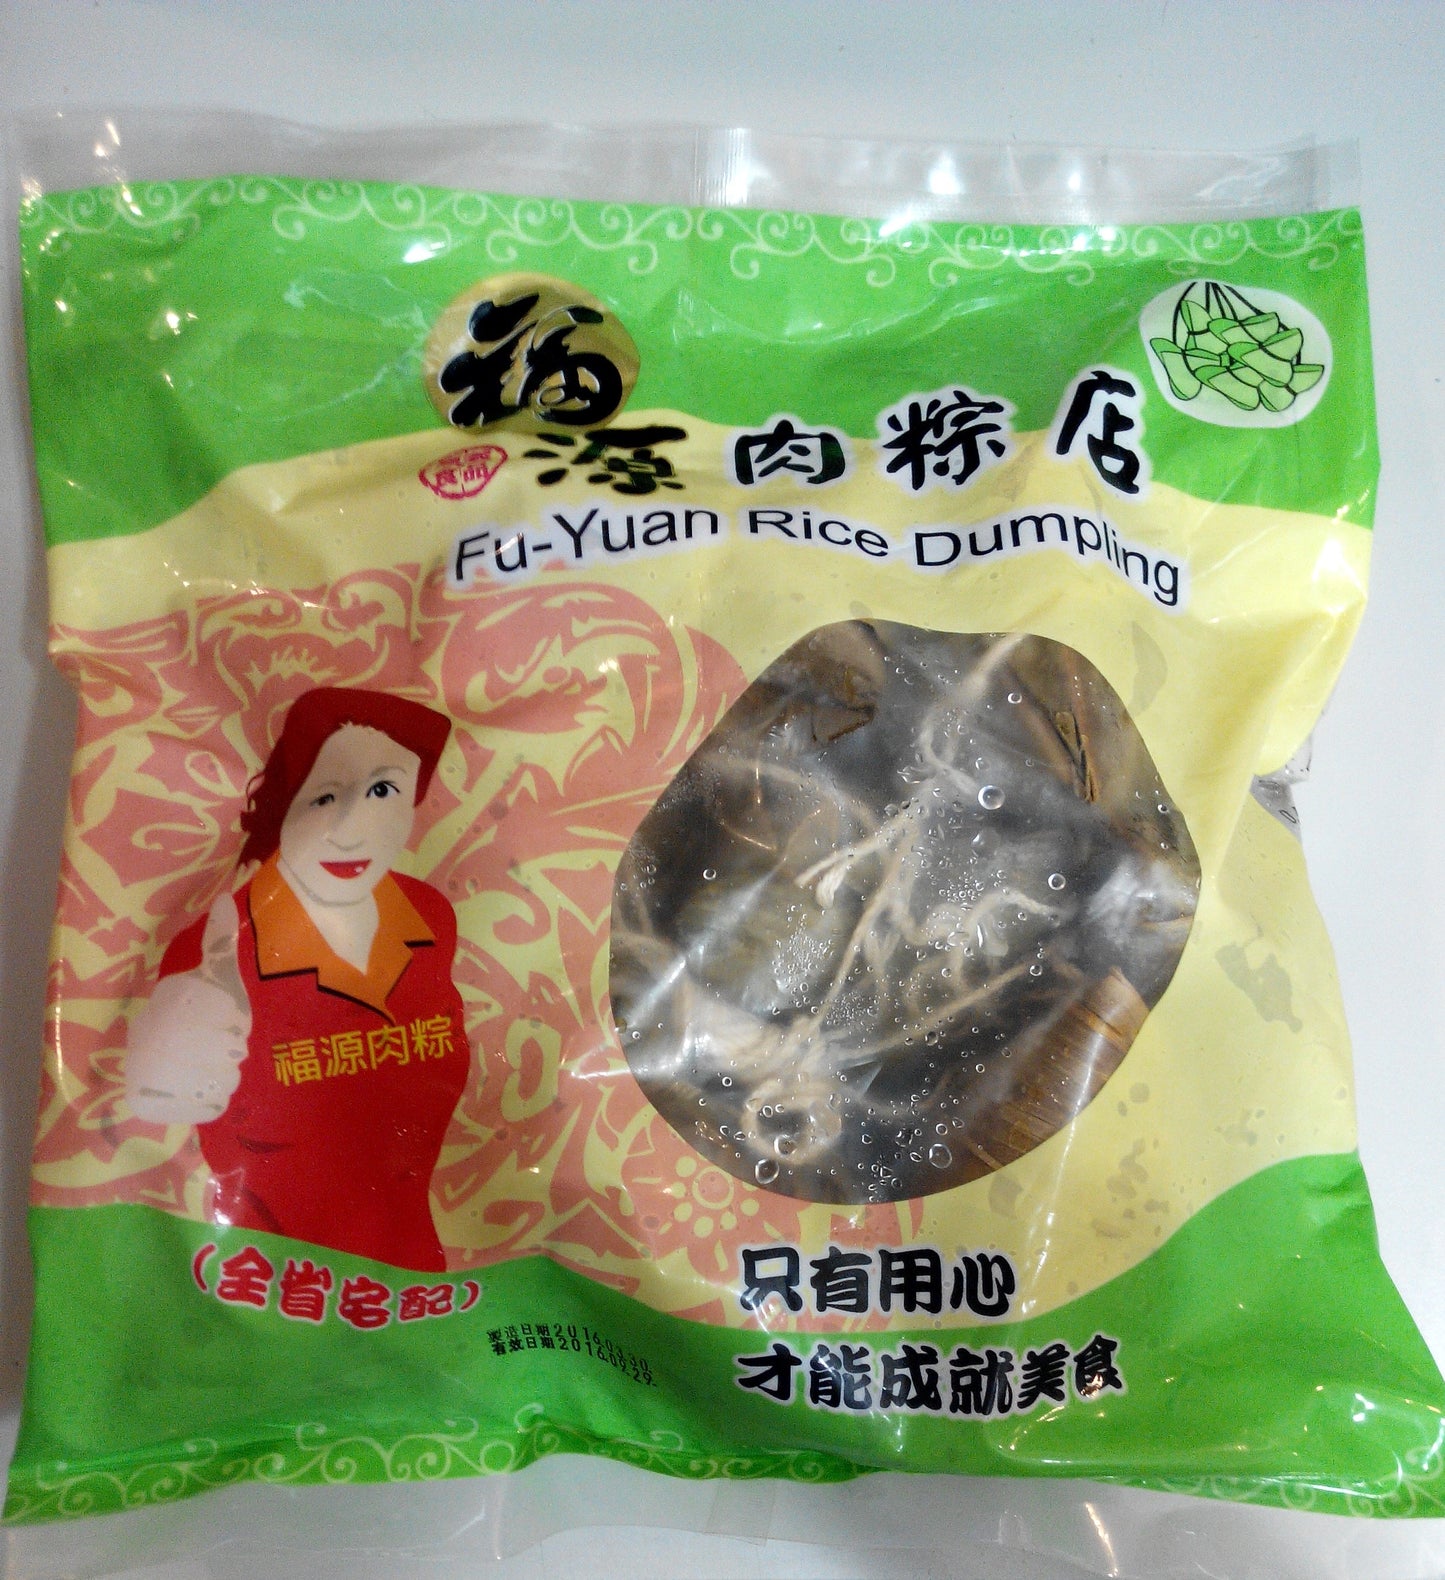 FY Rice Dumplings with Grains 福源 五穀米素粽